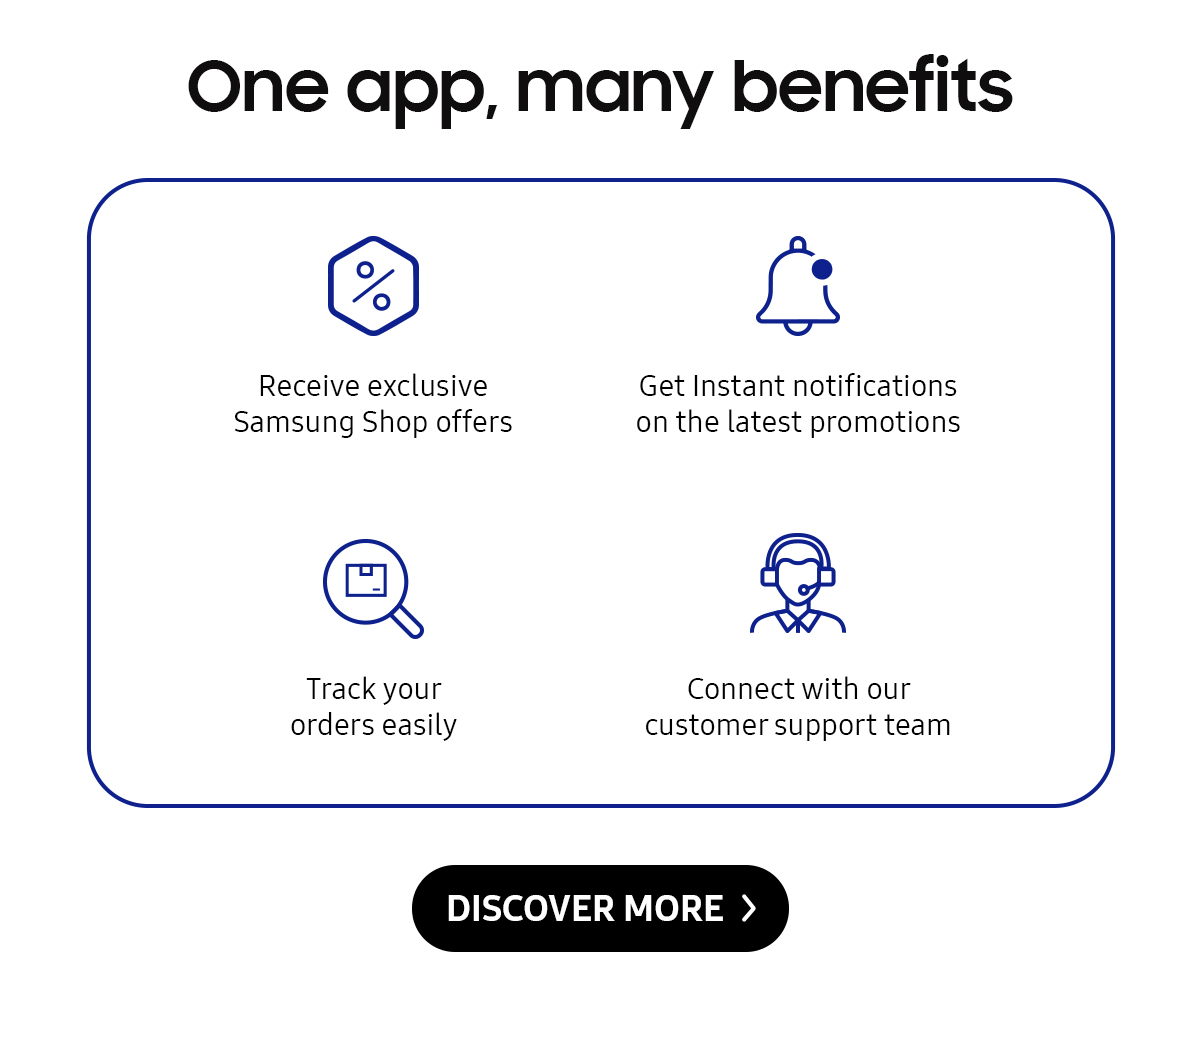 One app, many benefits